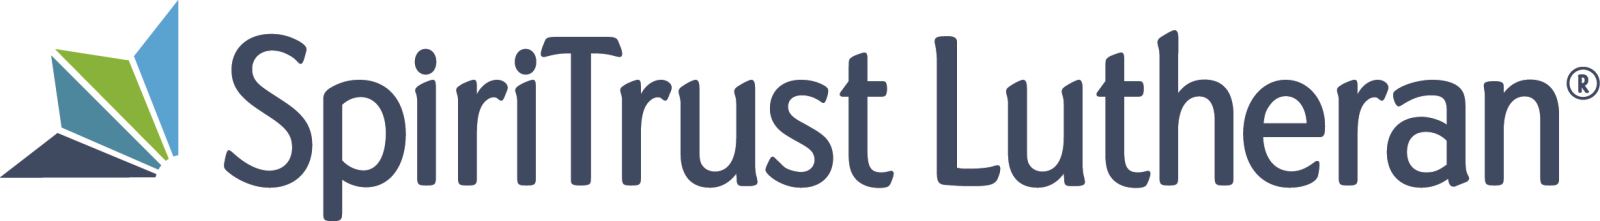 SpiriTrust Lutheran logo